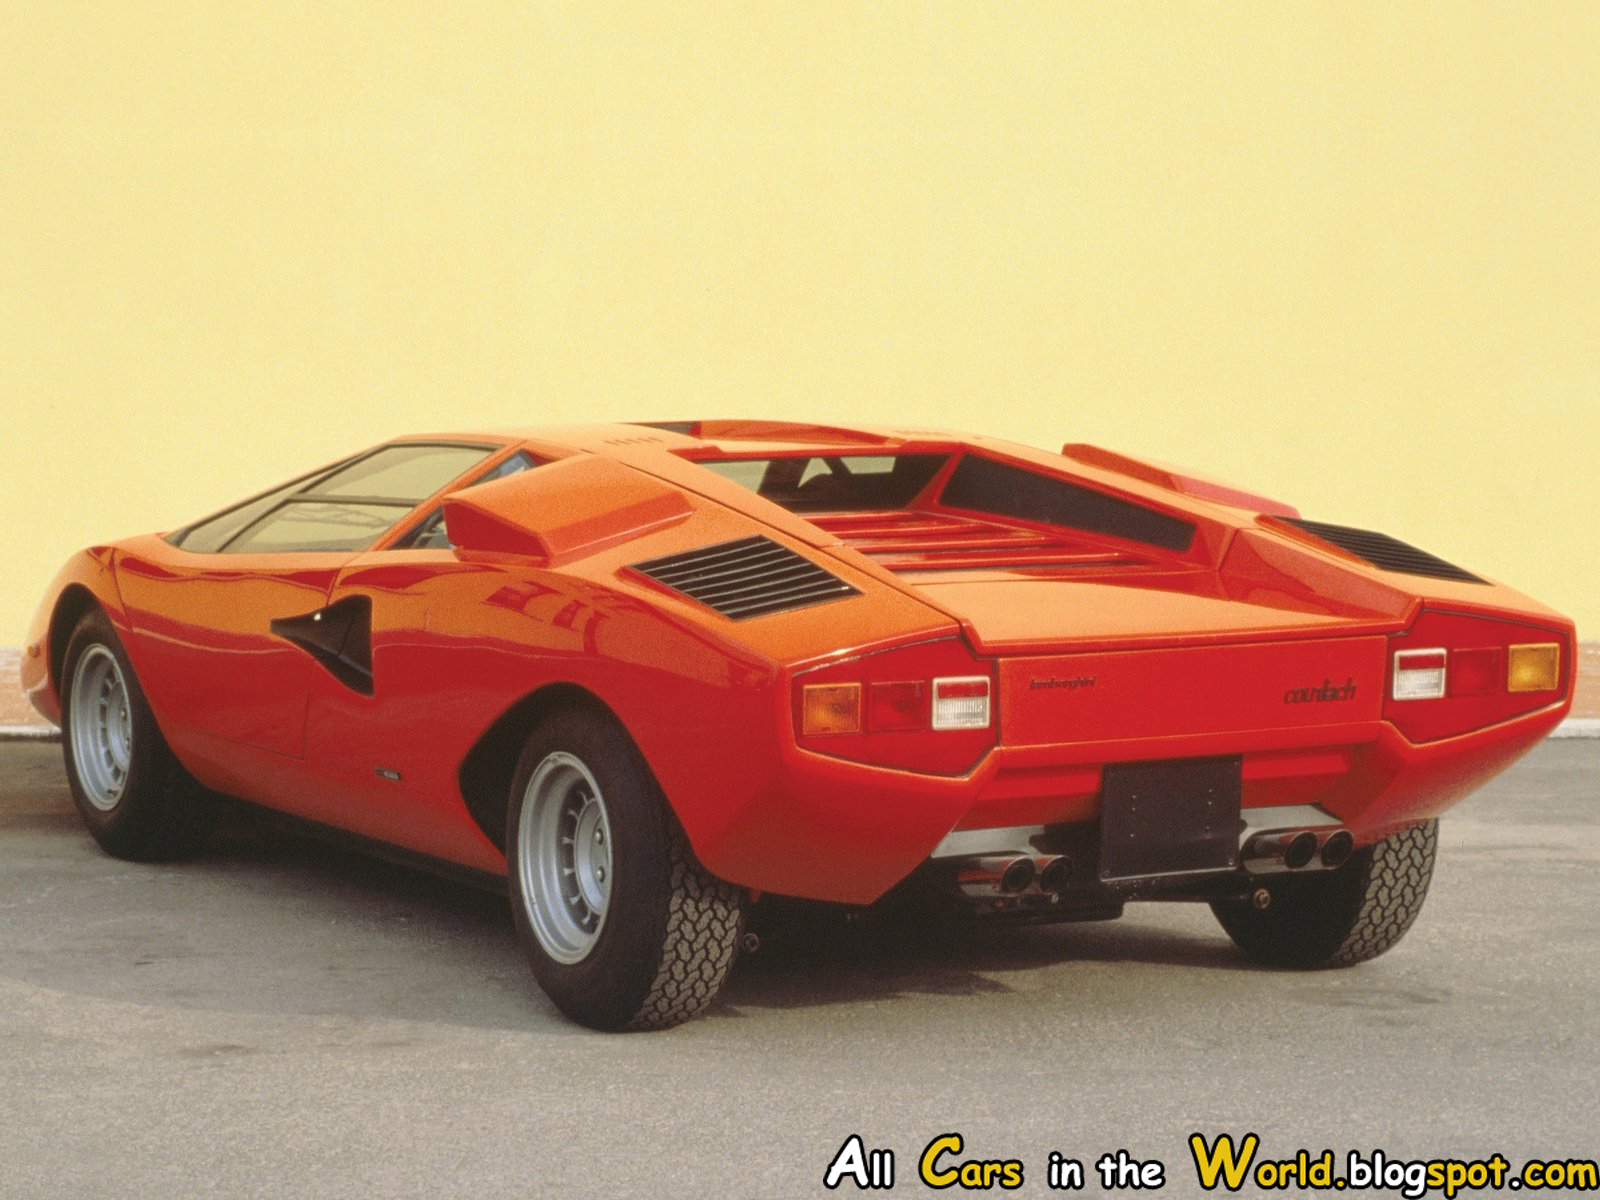 The 1973 Lamborghini Countach LP-400